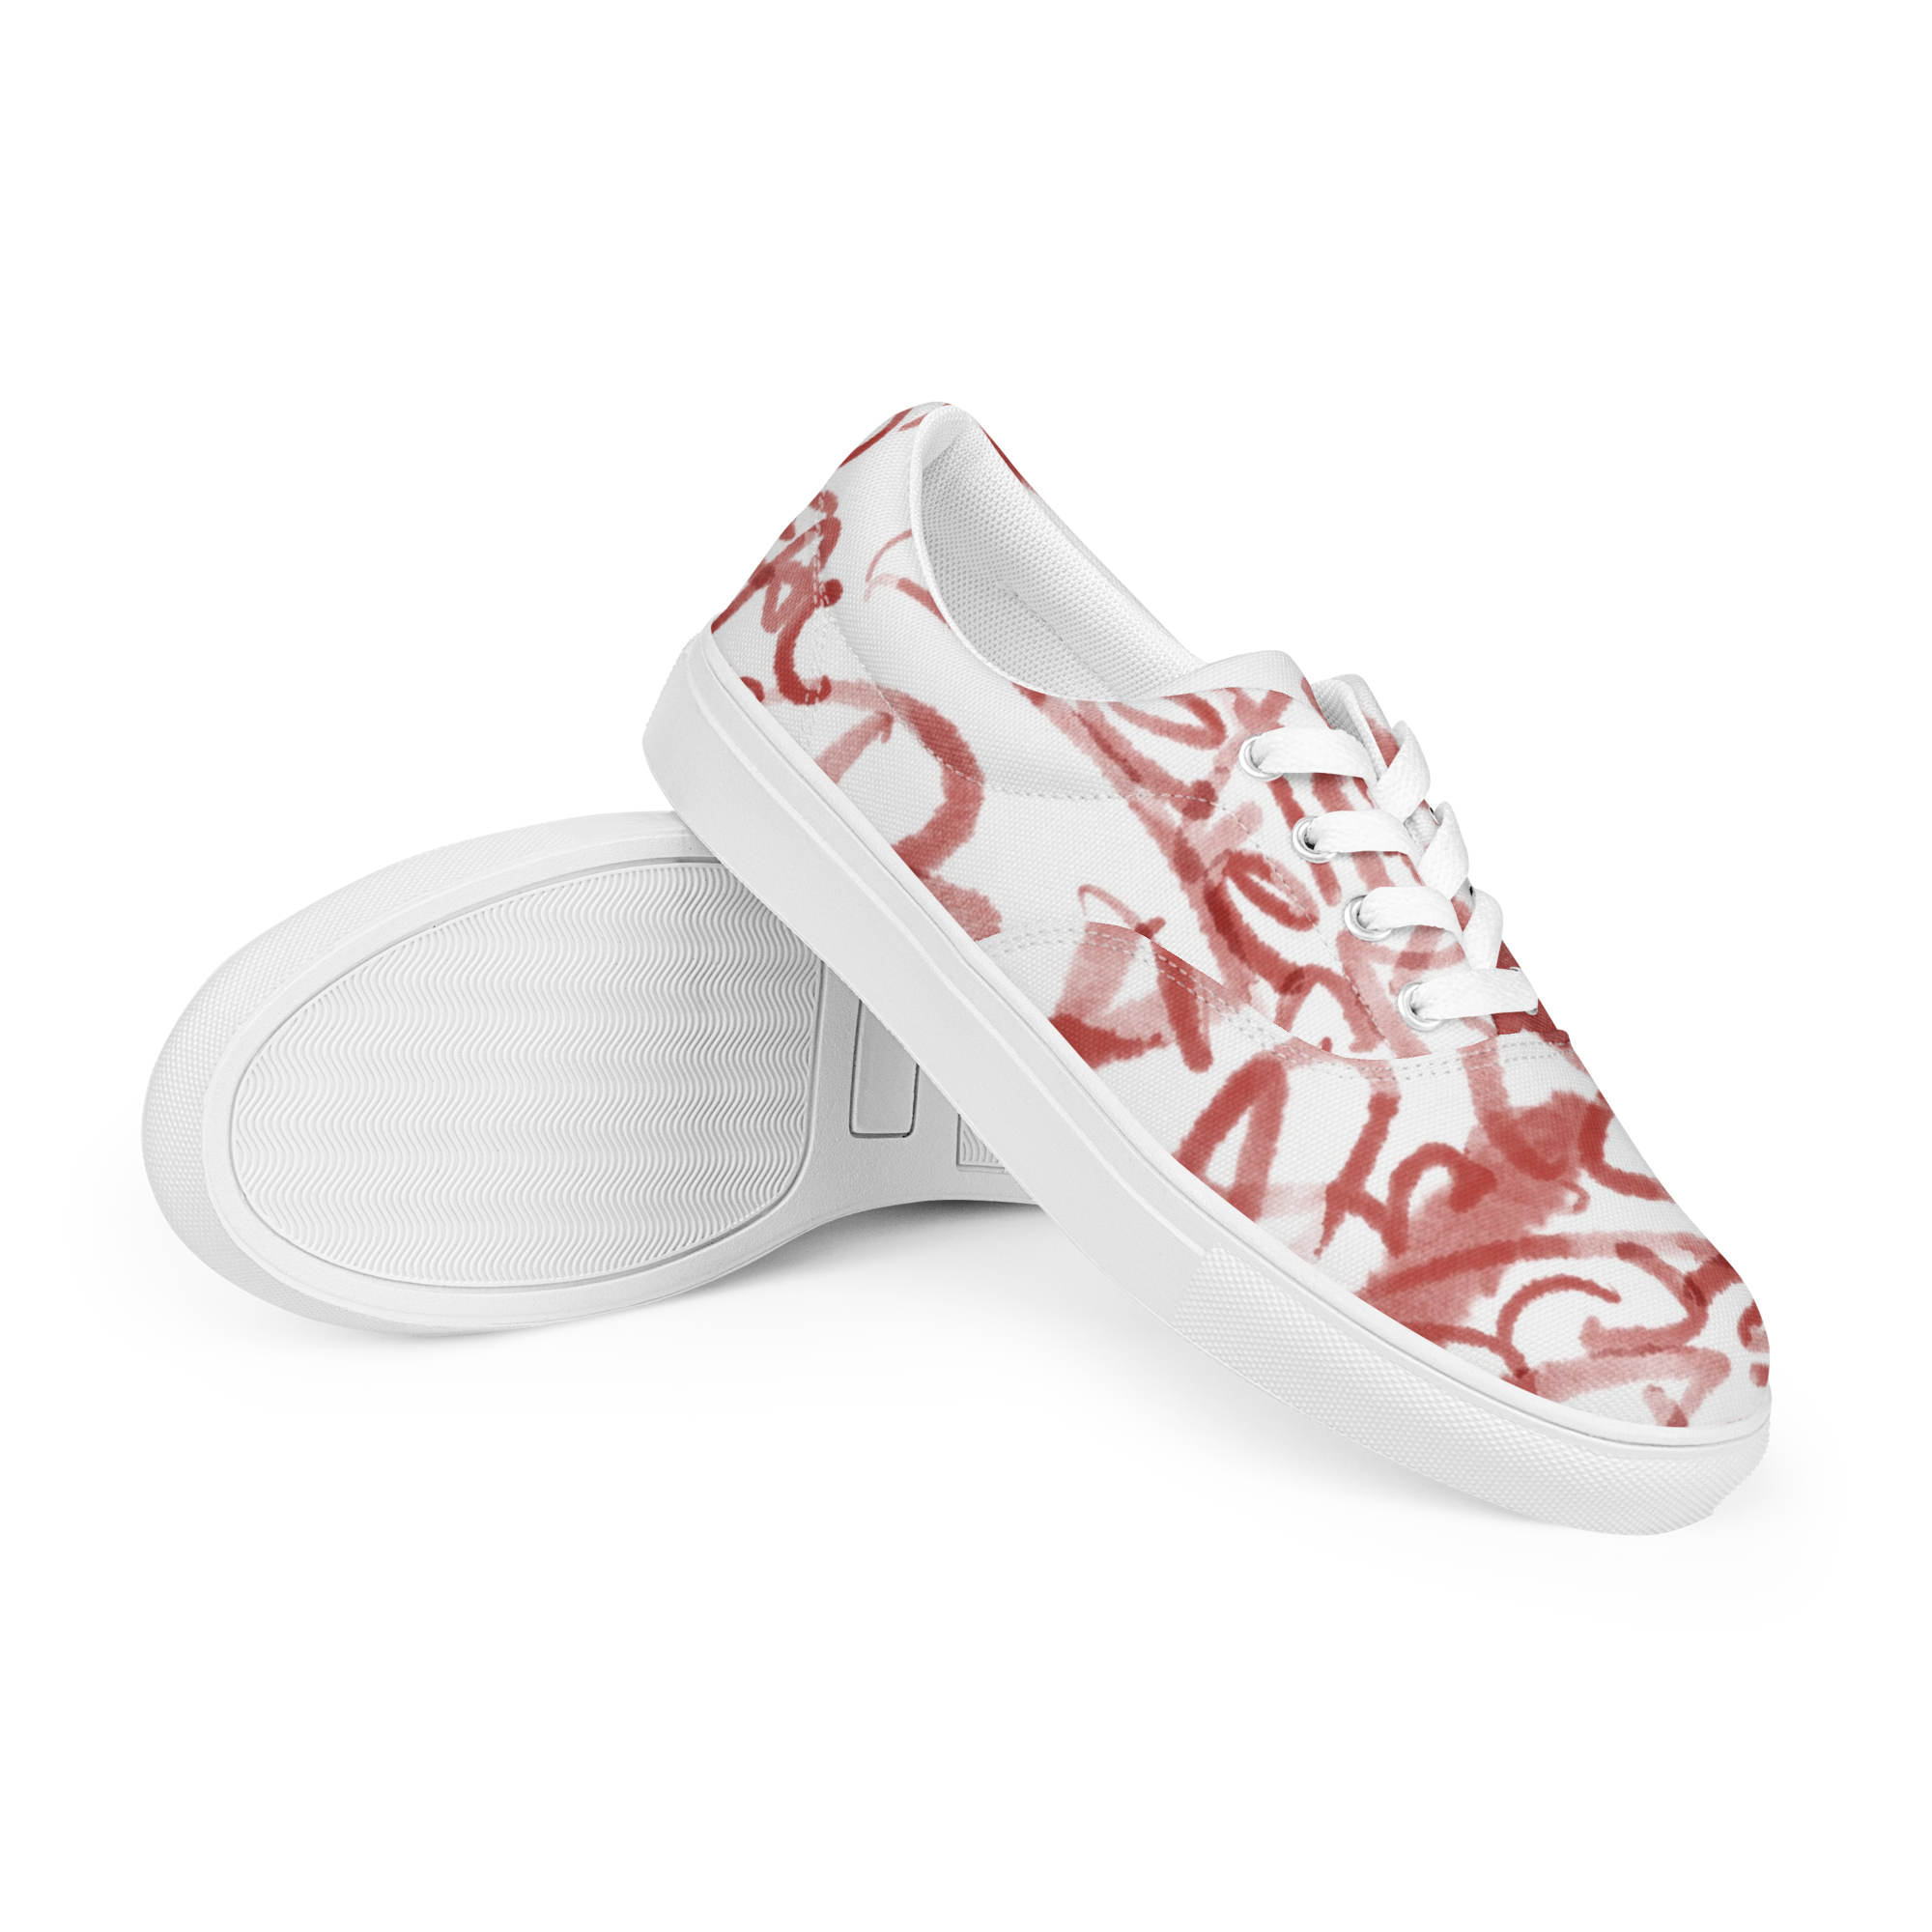 MPPAK843 Malepower Micro Prolong Thong - Red – Pole Dancing Shoes - KLS  Supplies Ltd